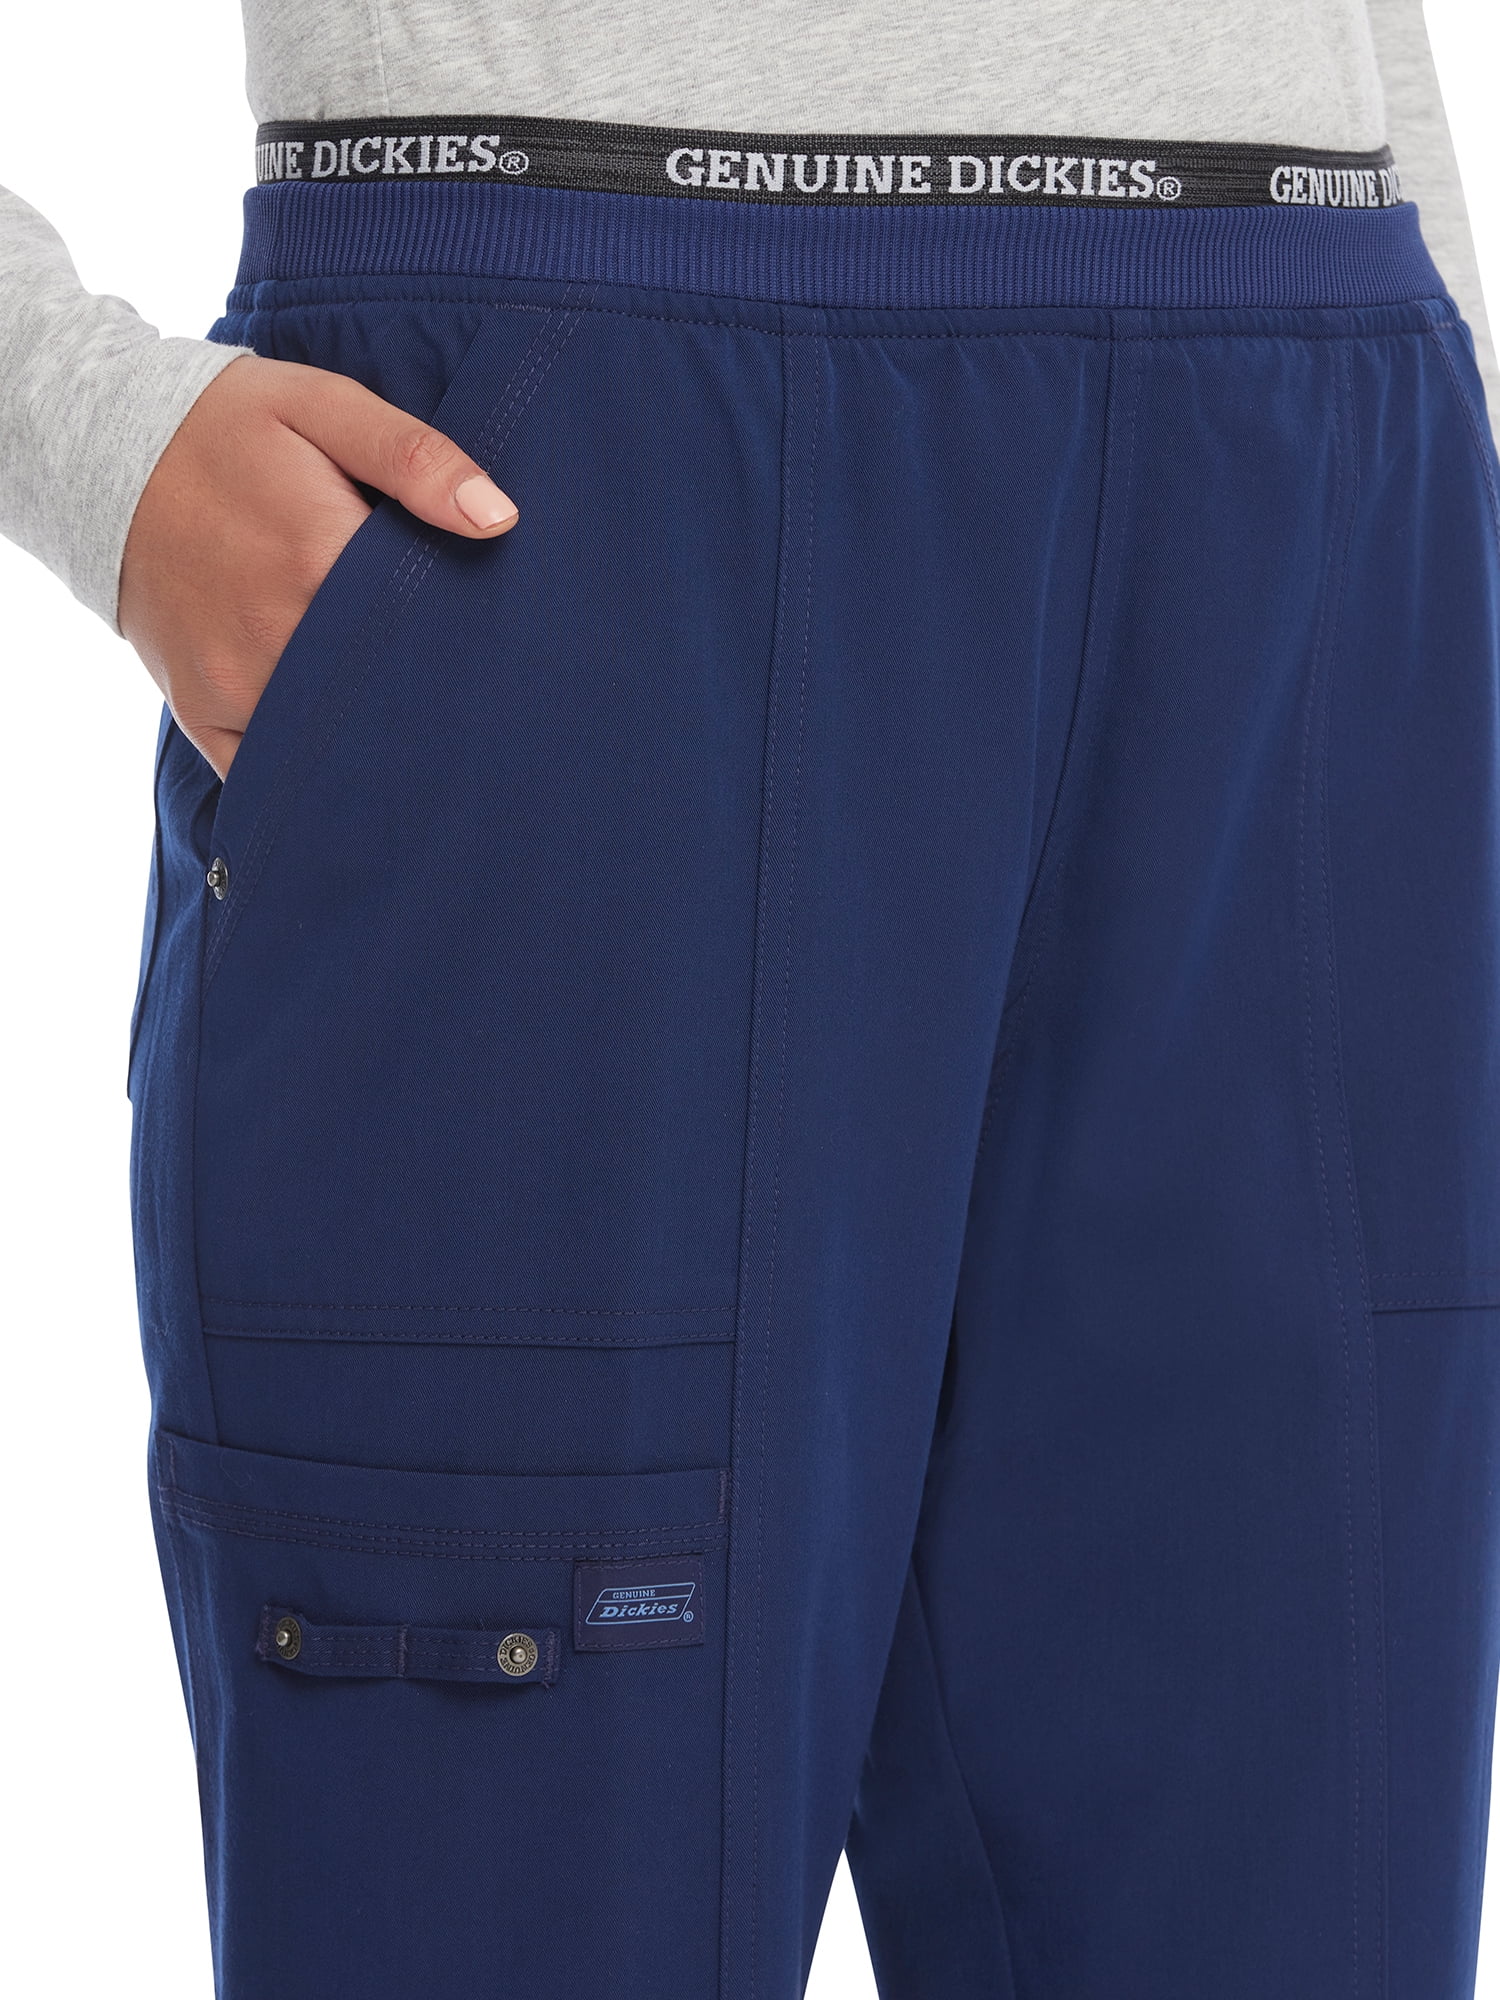 Genuine Dickies Women's Stretch Twill High-Waisted Pull-On Scrub Pant,  WM12P112 